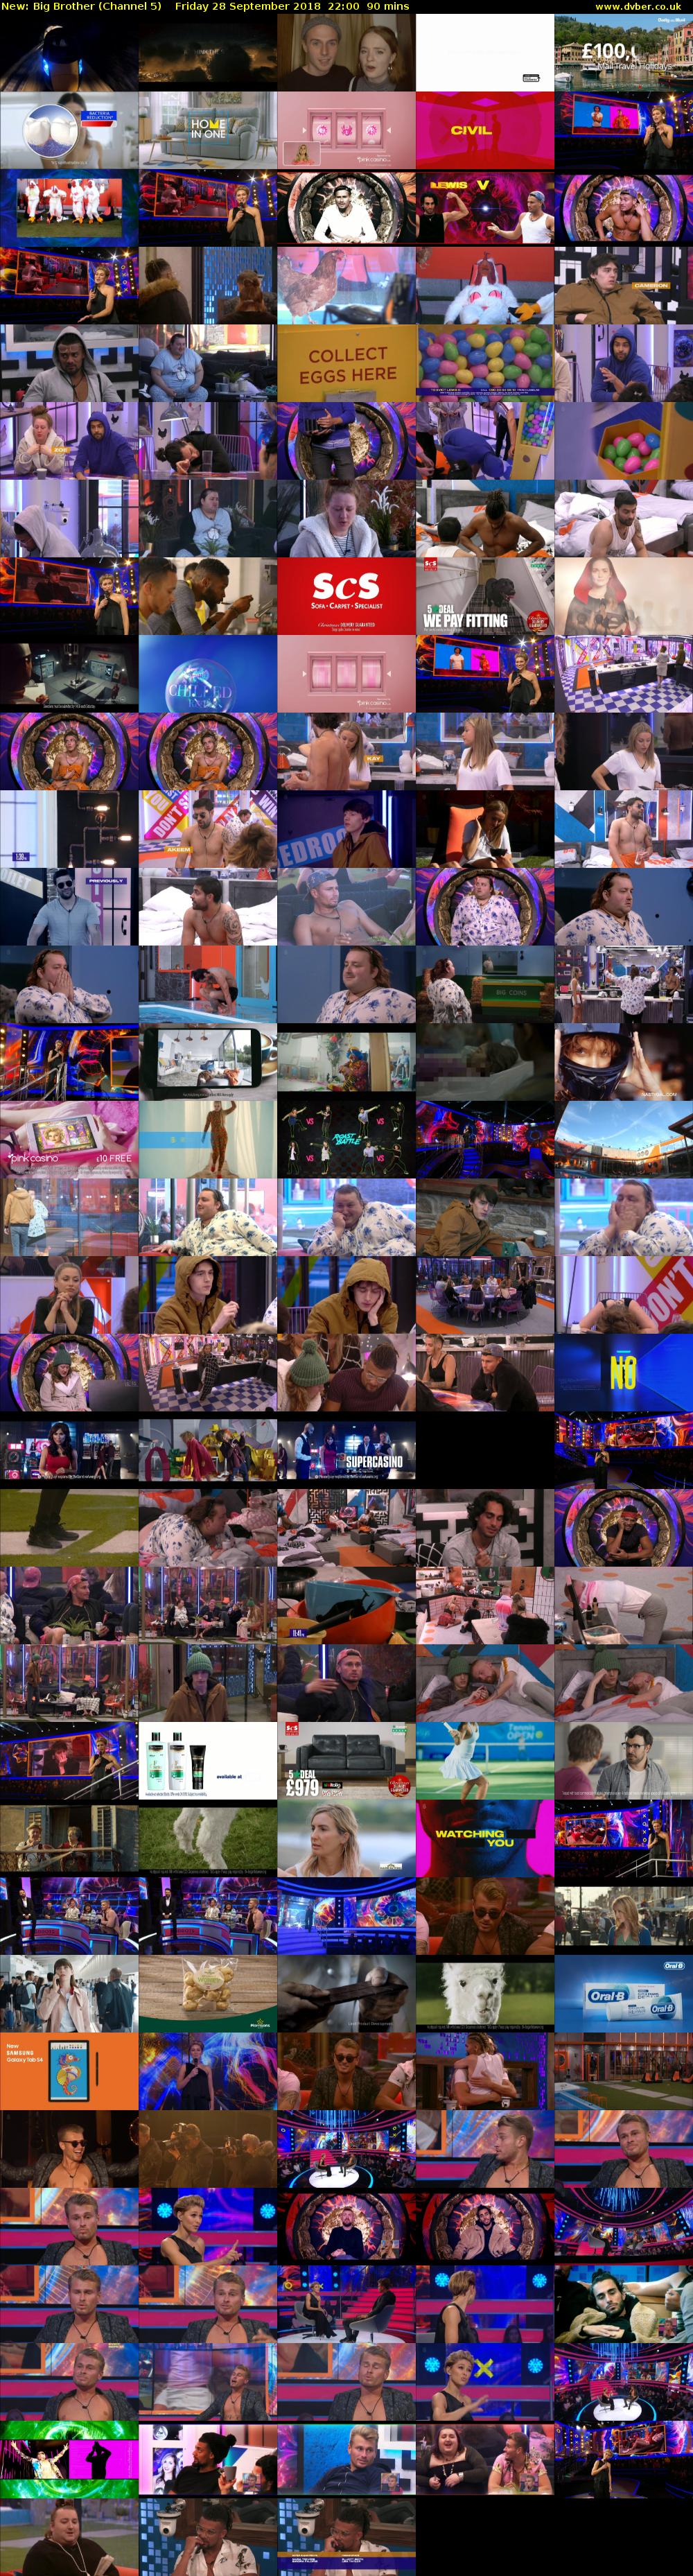 Big Brother (Channel 5) Friday 28 September 2018 22:00 - 23:30